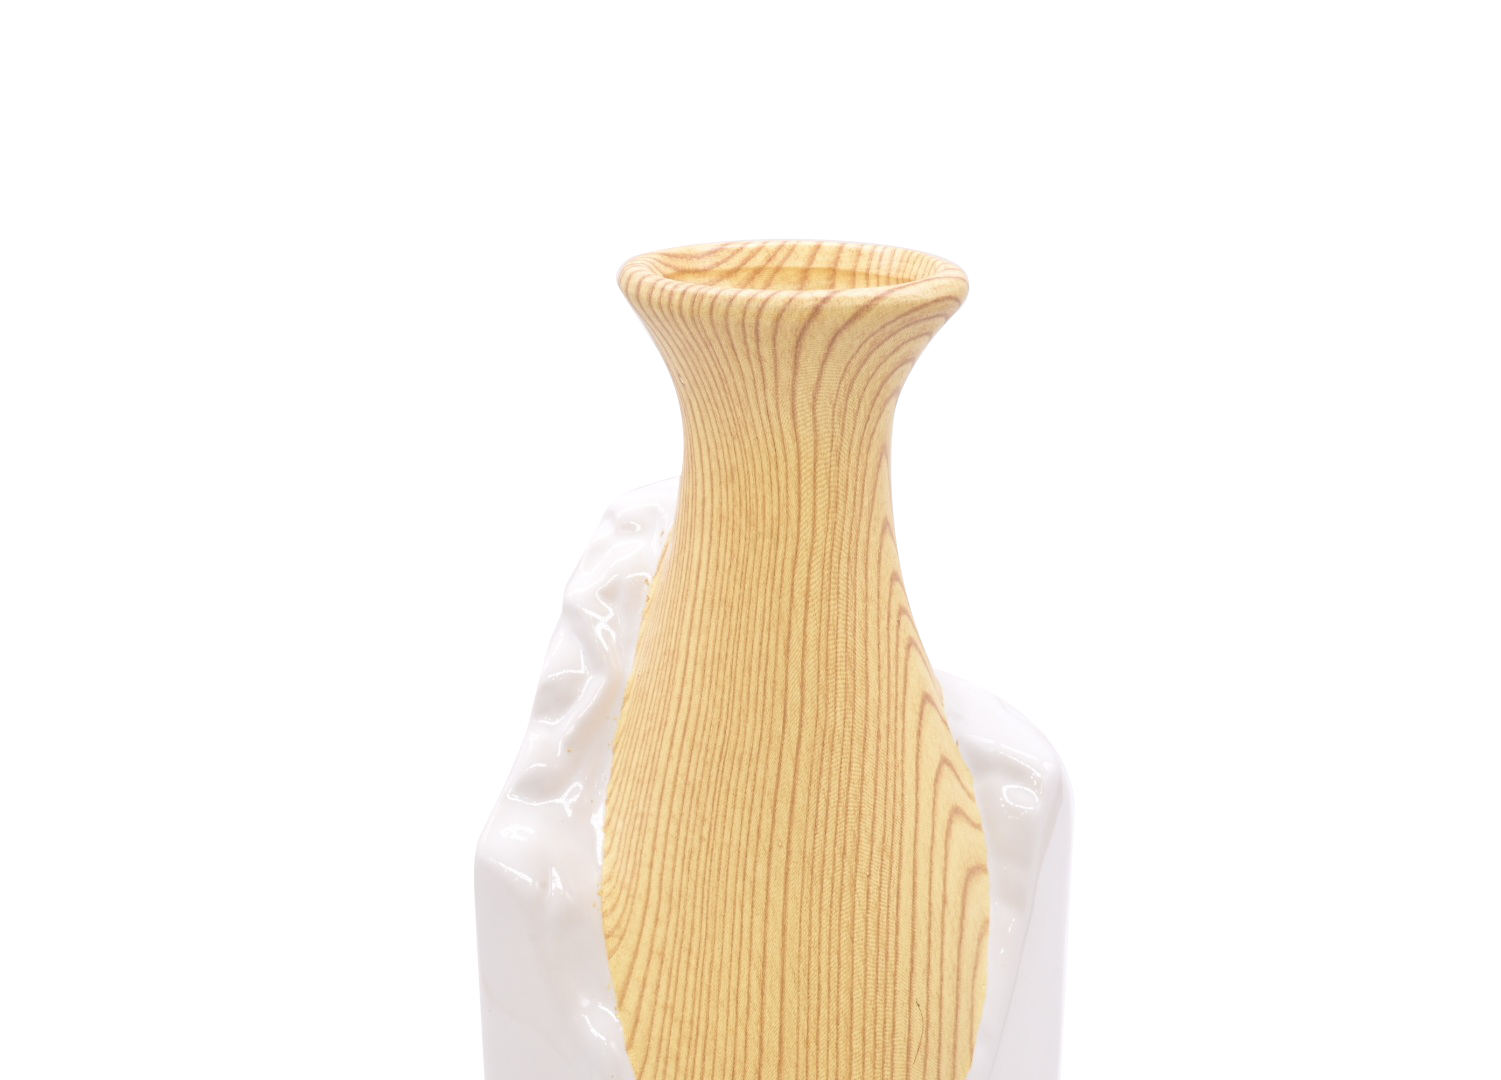 Wooden pattern vase